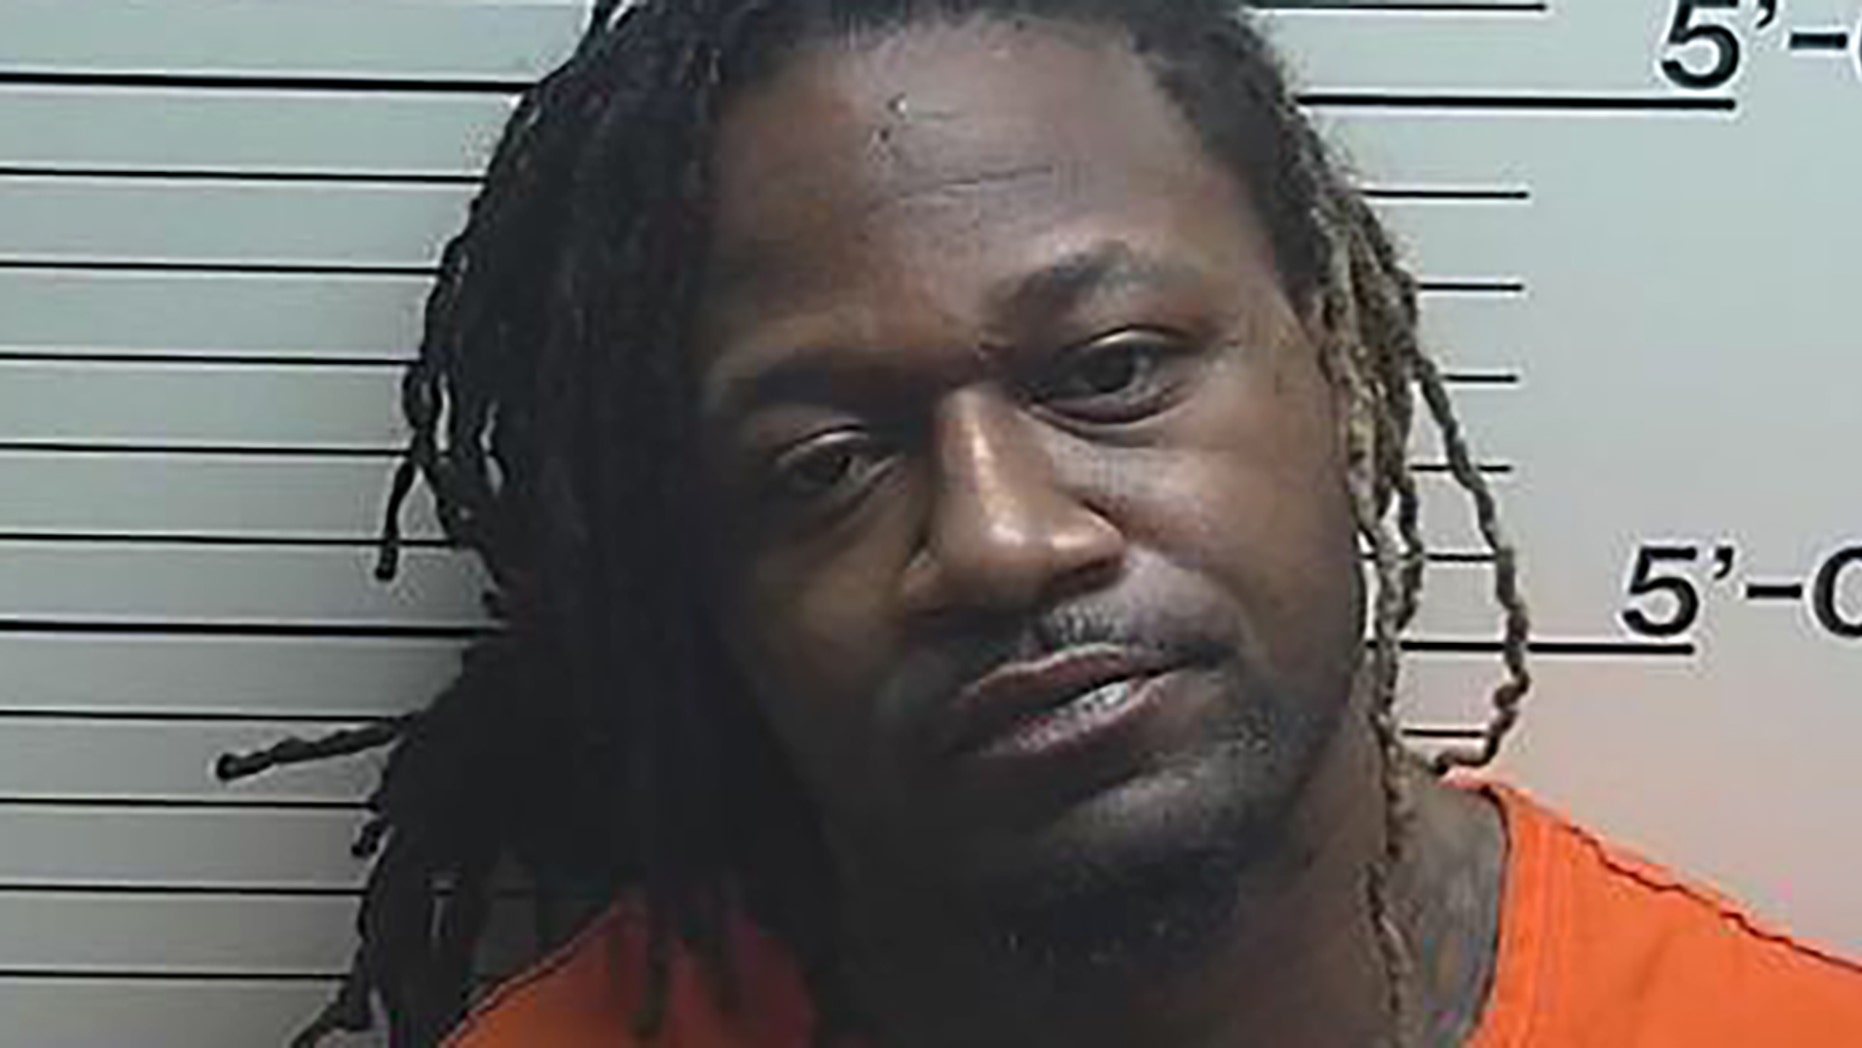 Adam Jones was arrested after an incident at an Indiana casino.